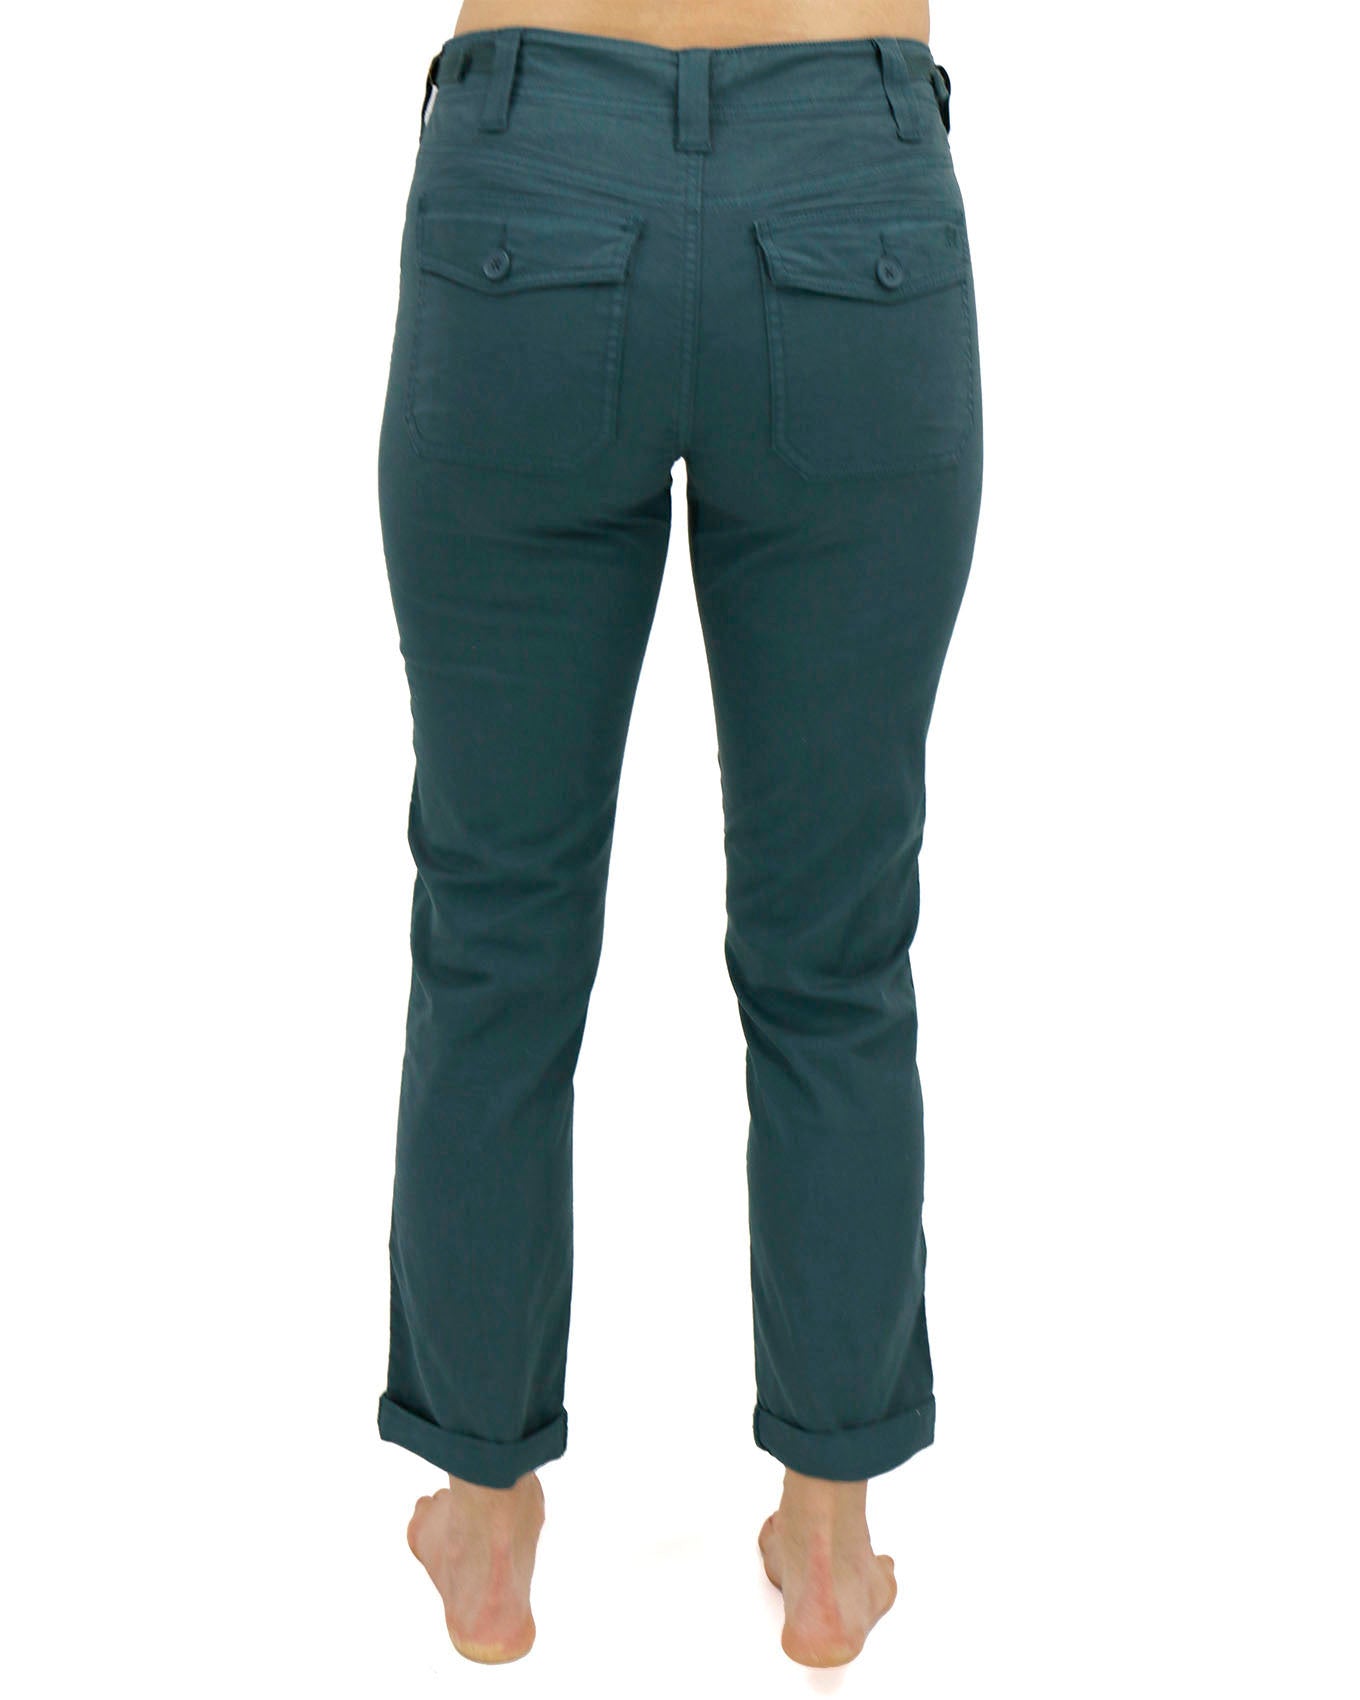 Back stock shot of Green Camper Cargo Pants